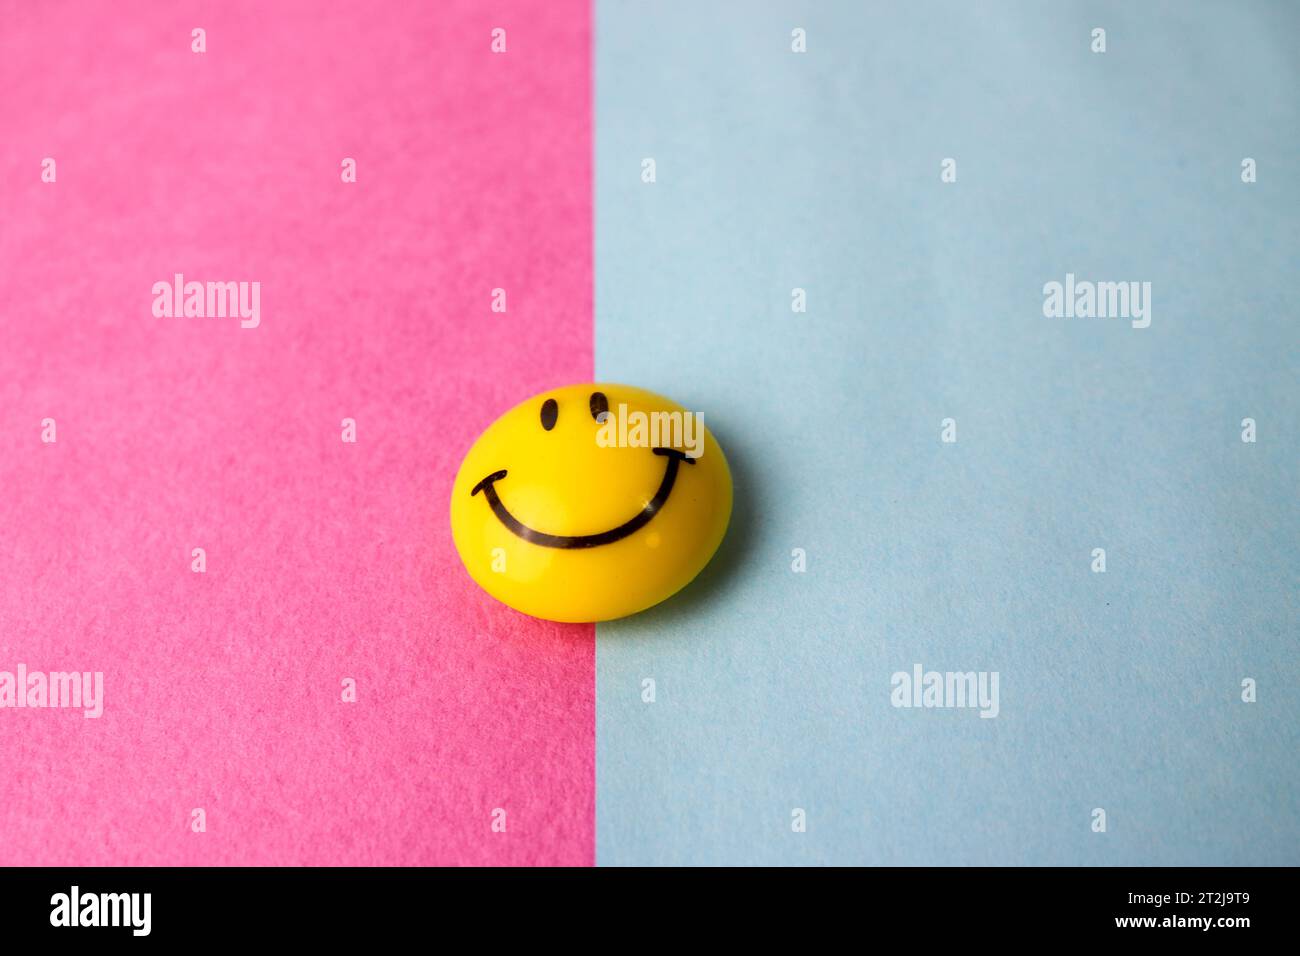 Round plastic yellow joyful smiling smiling toy round face Emoji on a pink blue violet background. Stock Photo